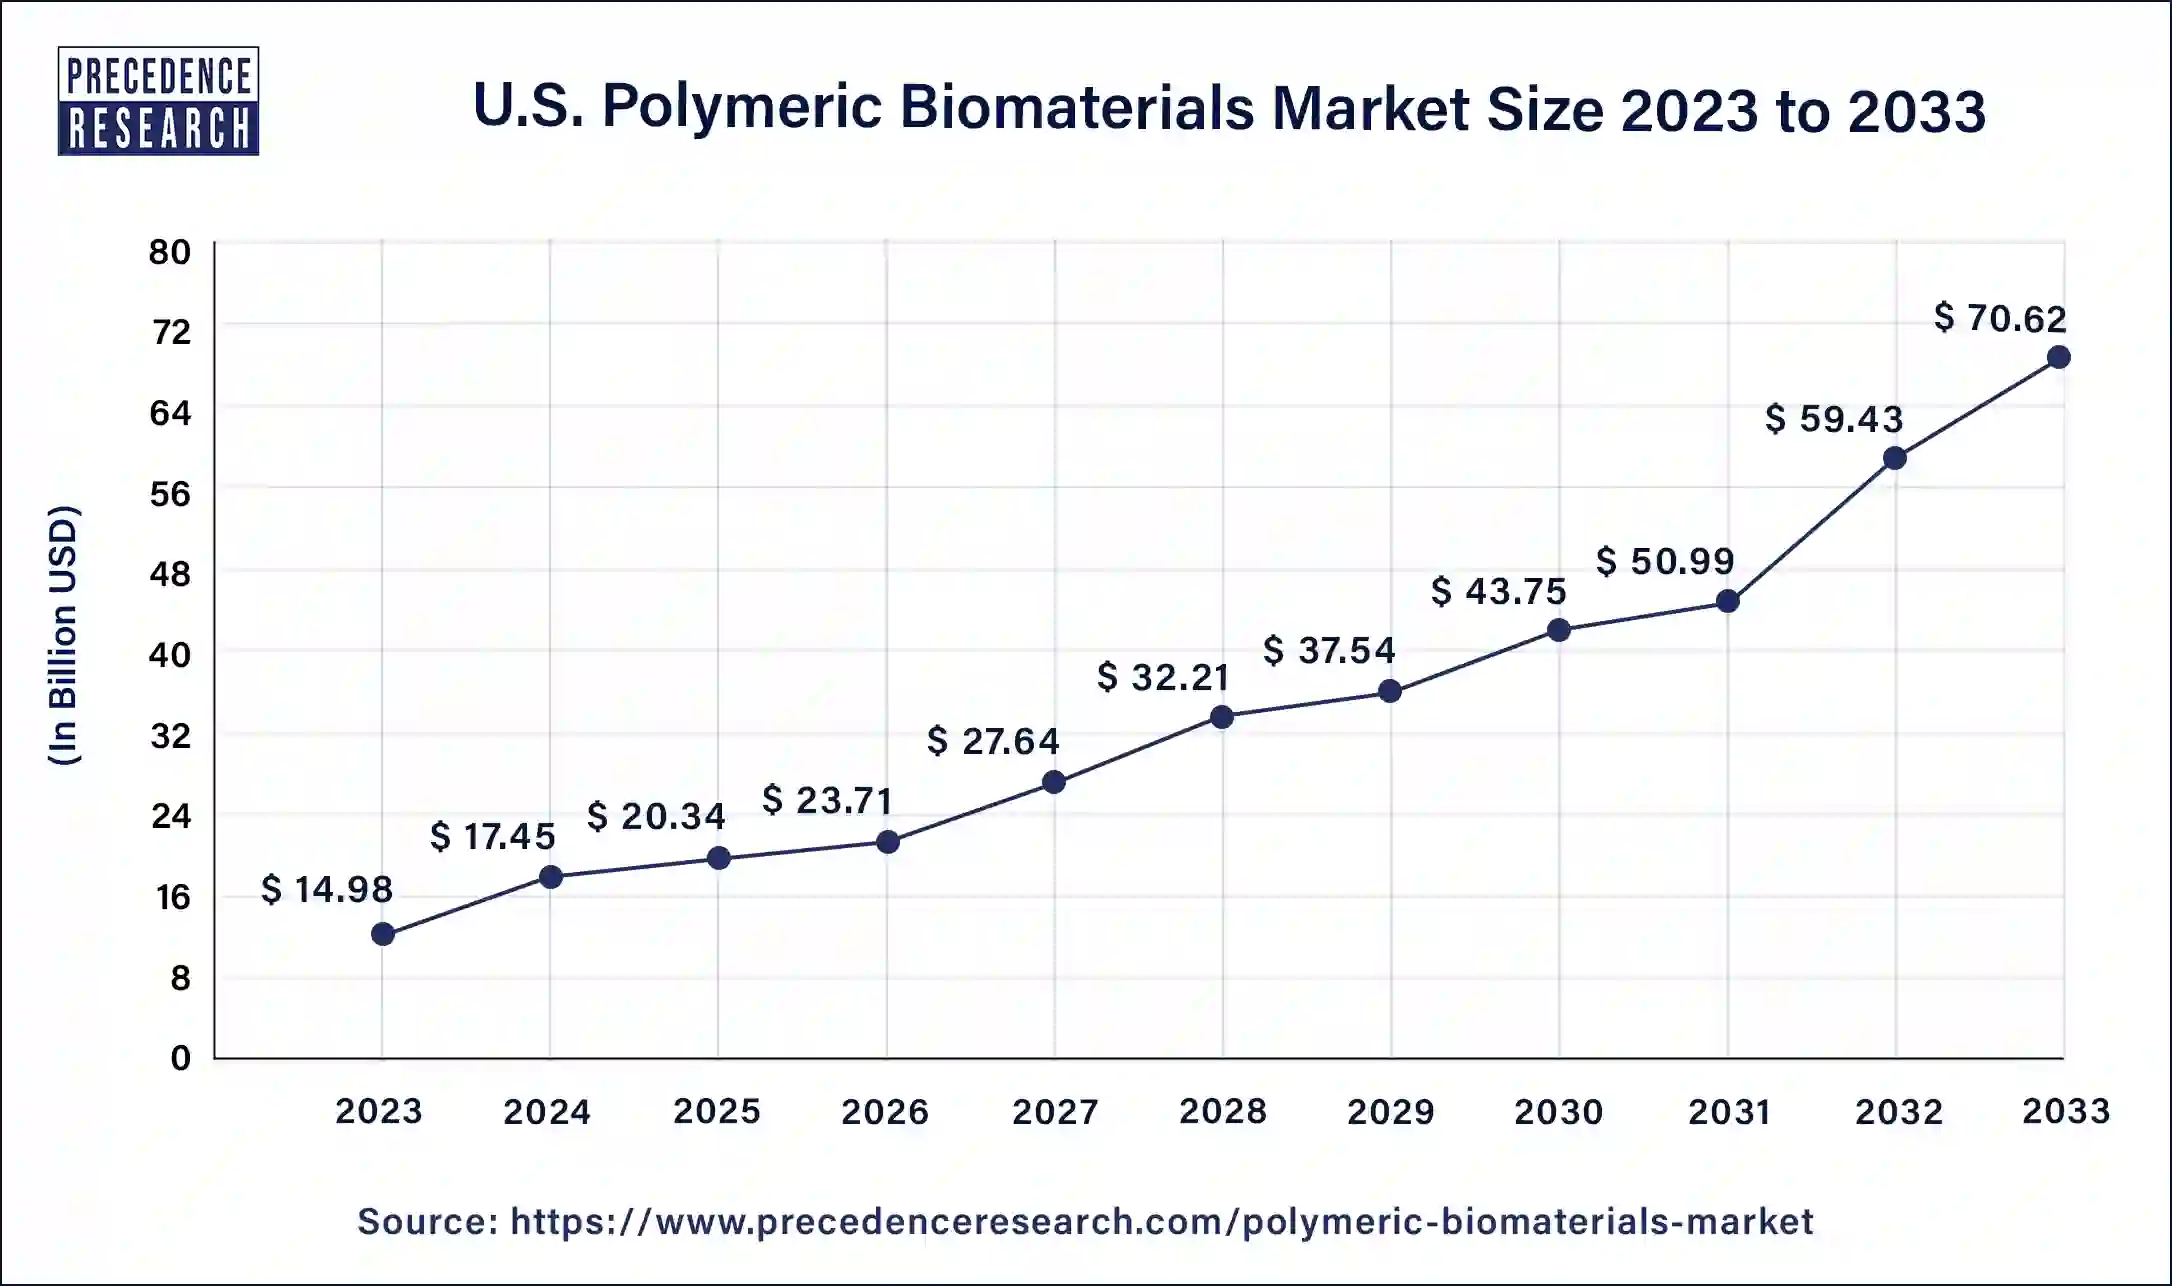 U.S. Polymeric Biomaterials Market Size 2024 to 2033